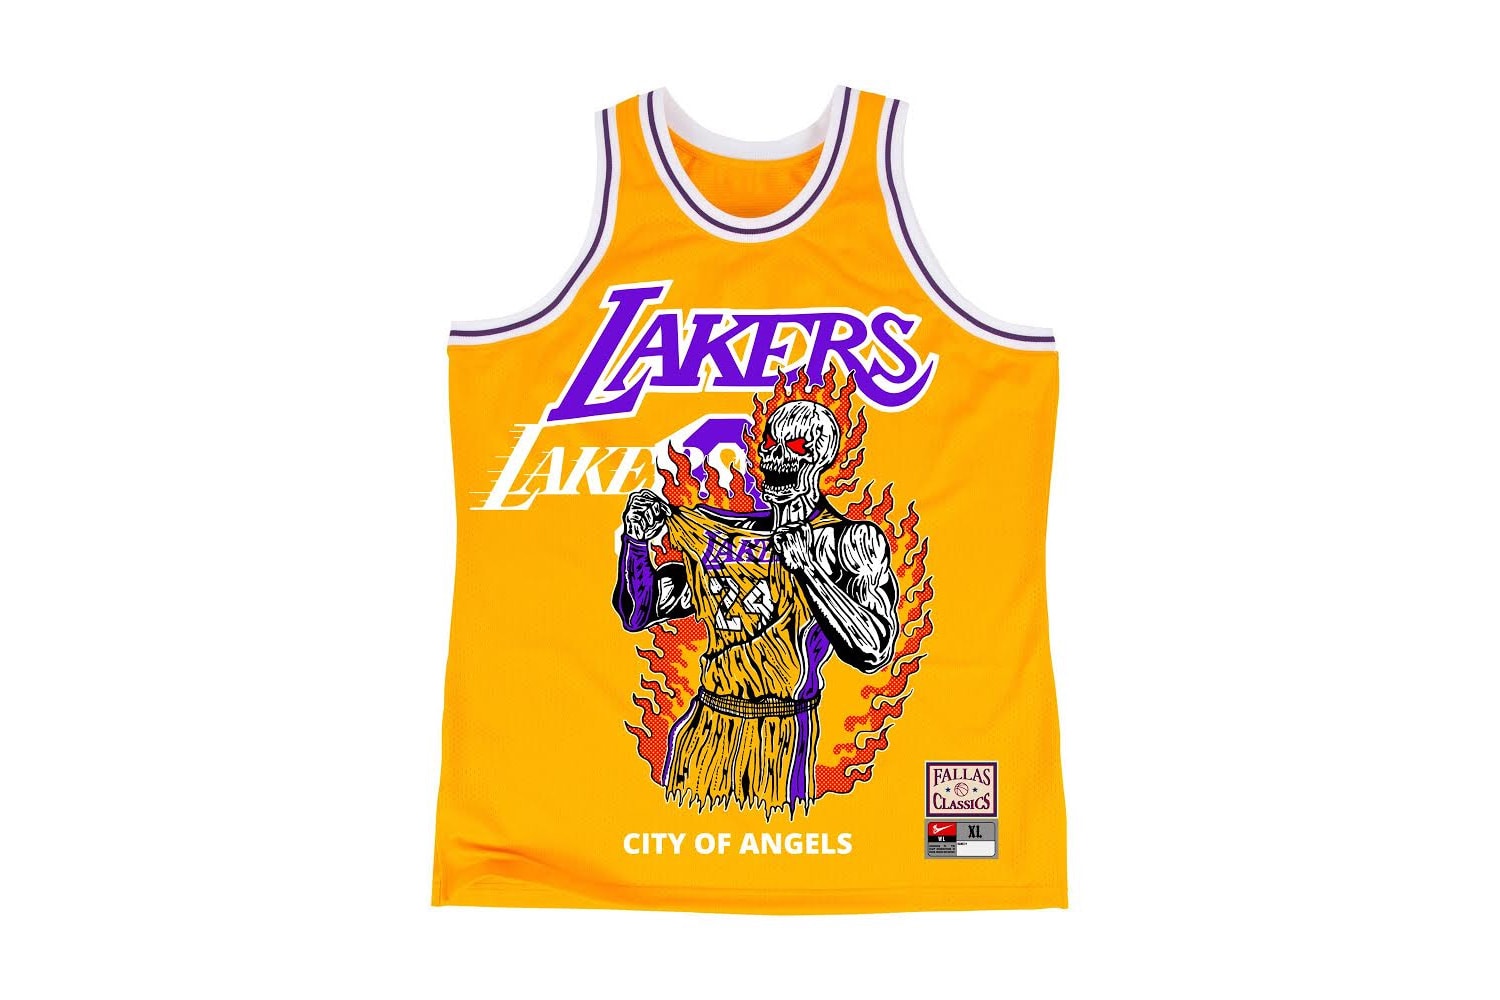 Warren Lotas Los Angeles Lakers basketball jersey april 2018 release date info drop kobe bryant city of angels